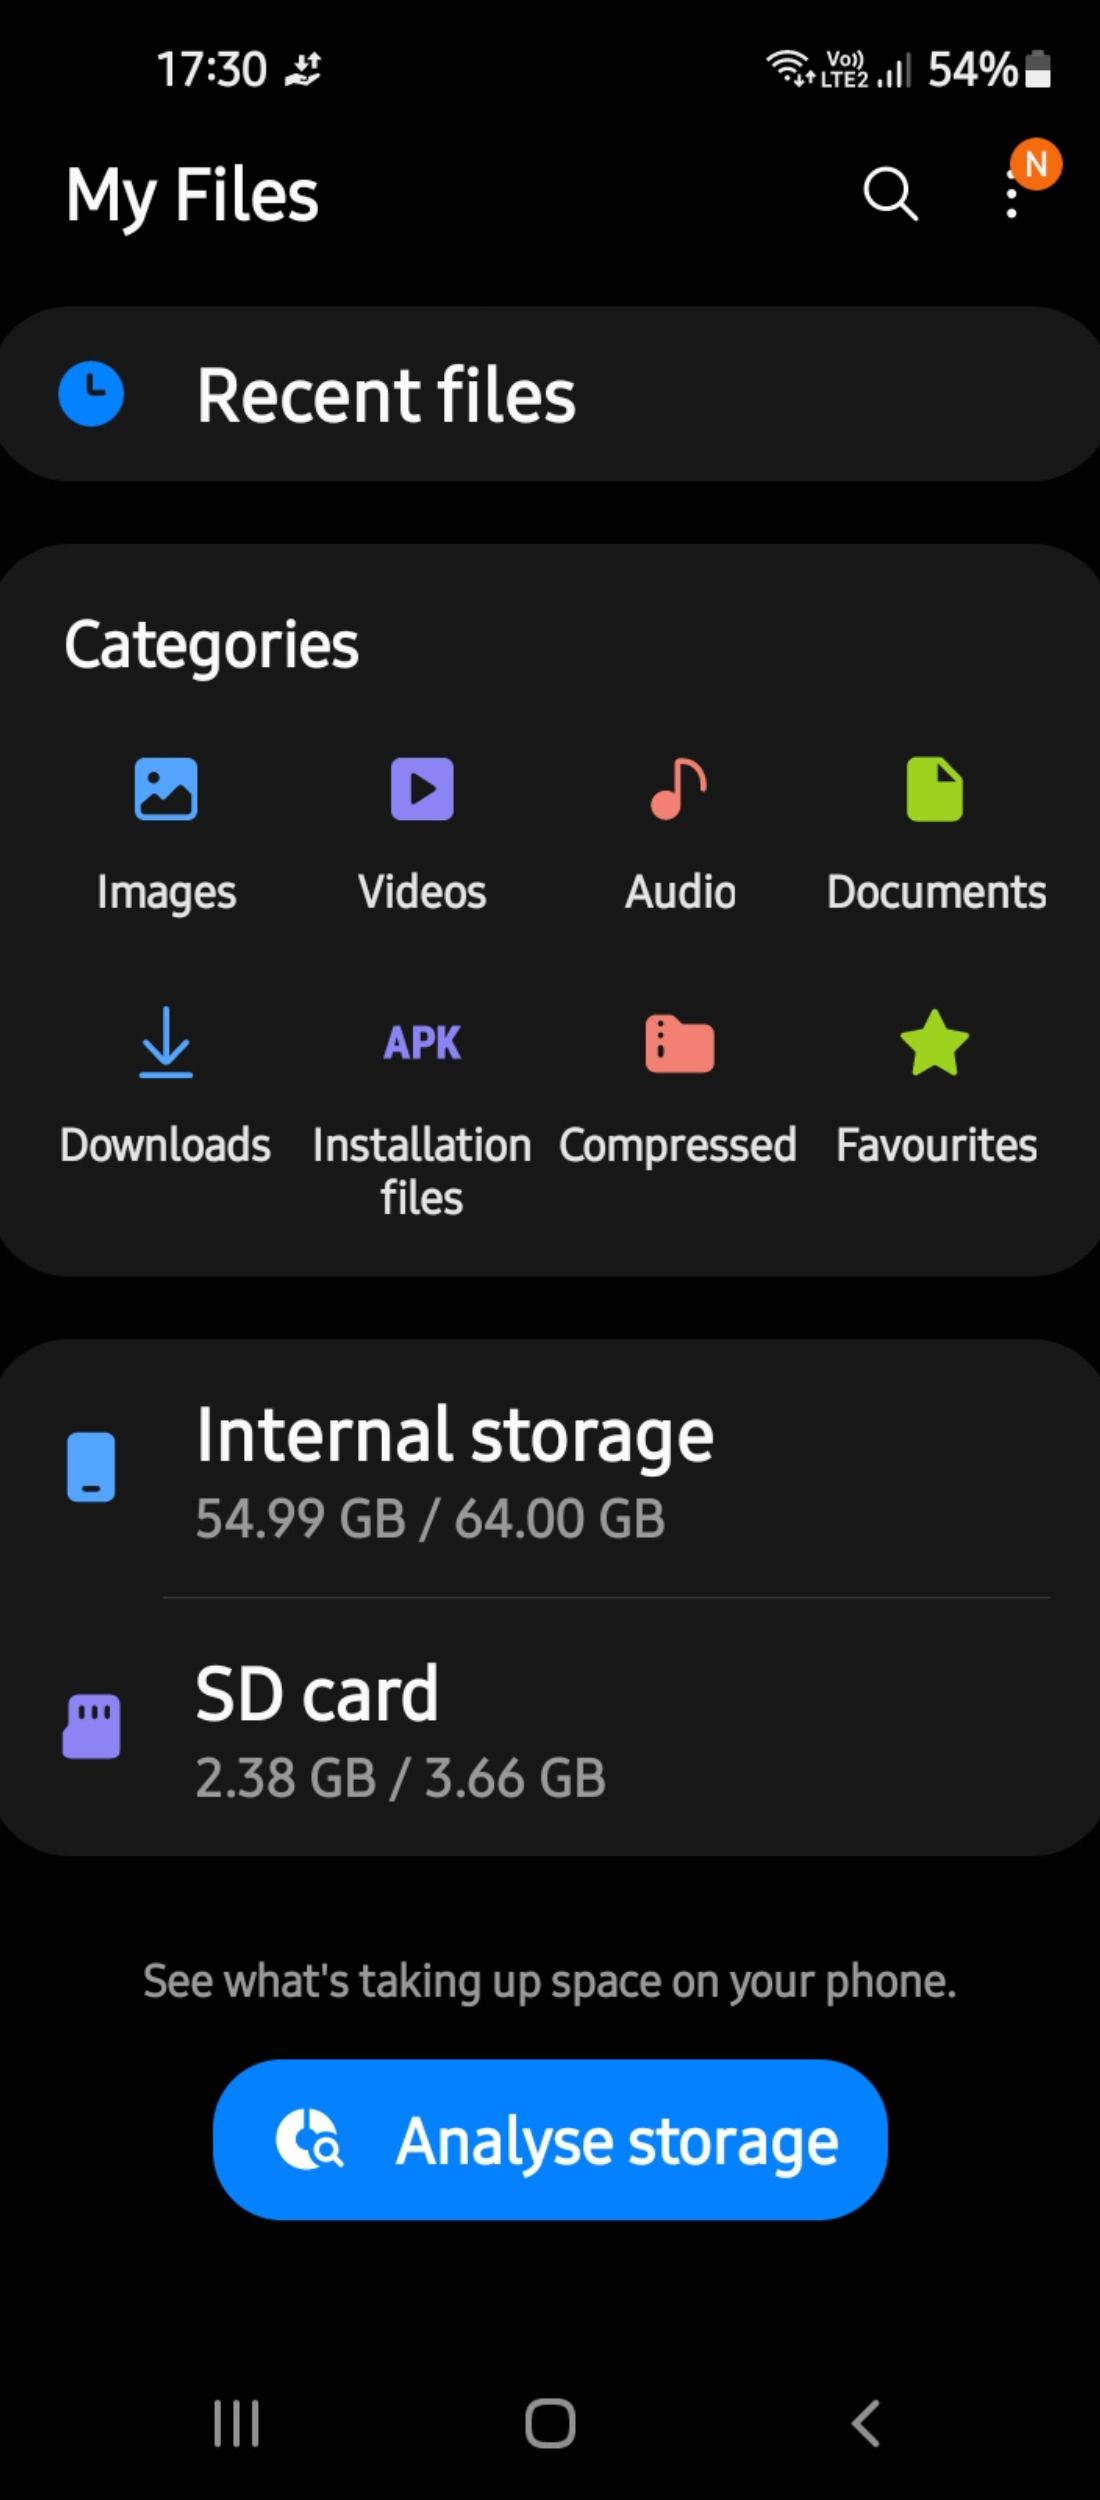 Audio settings in the My Files app